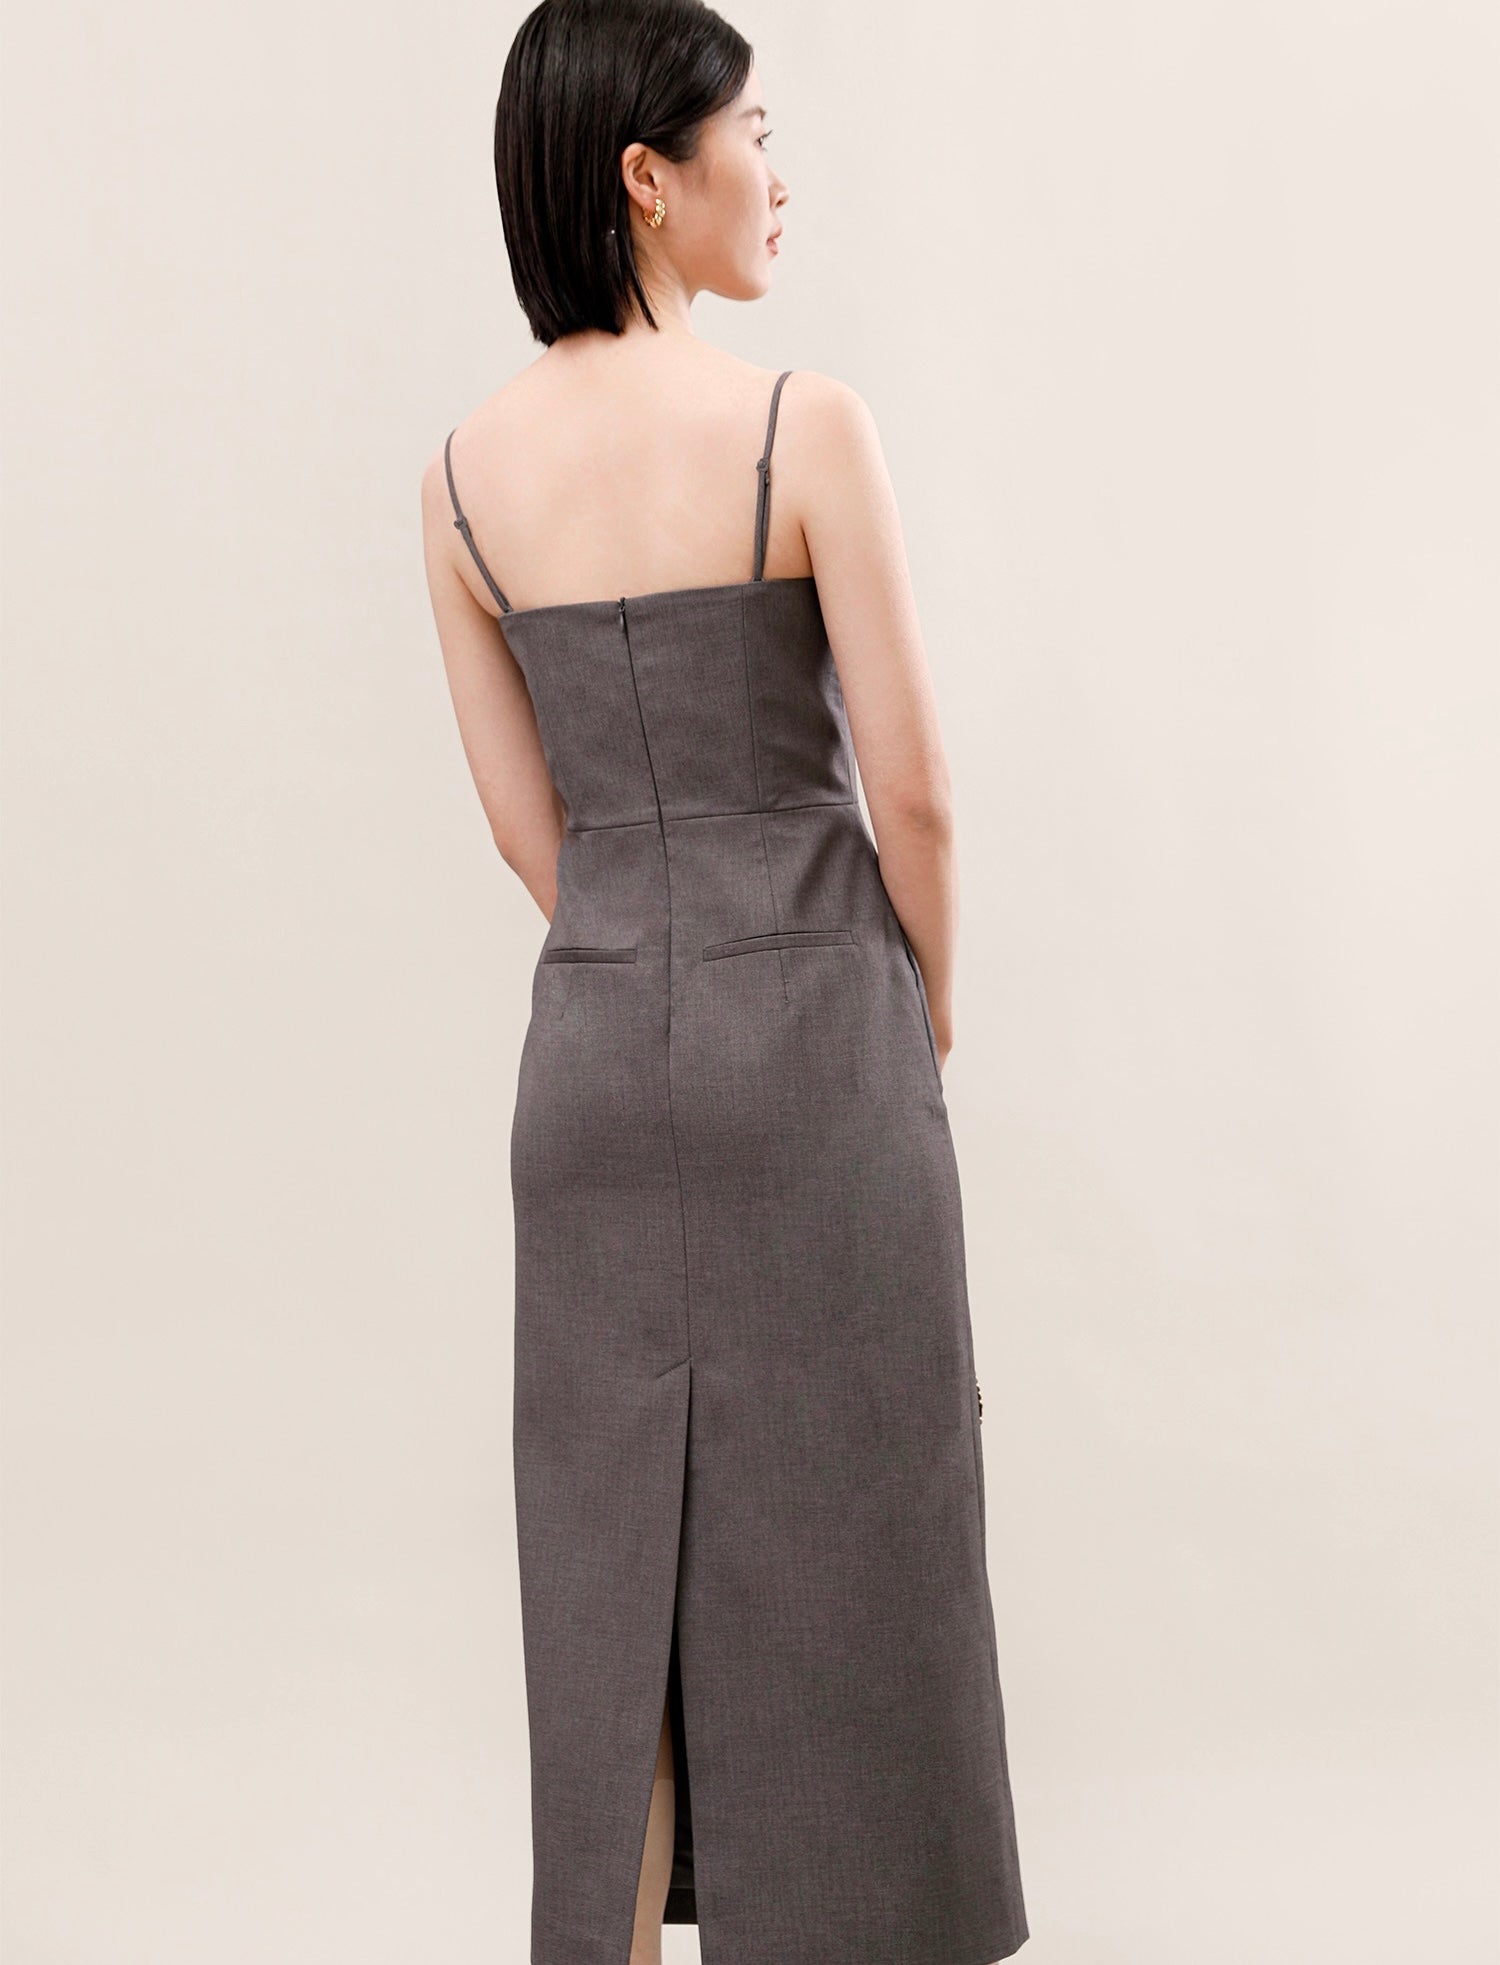 2-Way Tailored Bustier Pocket Dress in Grey